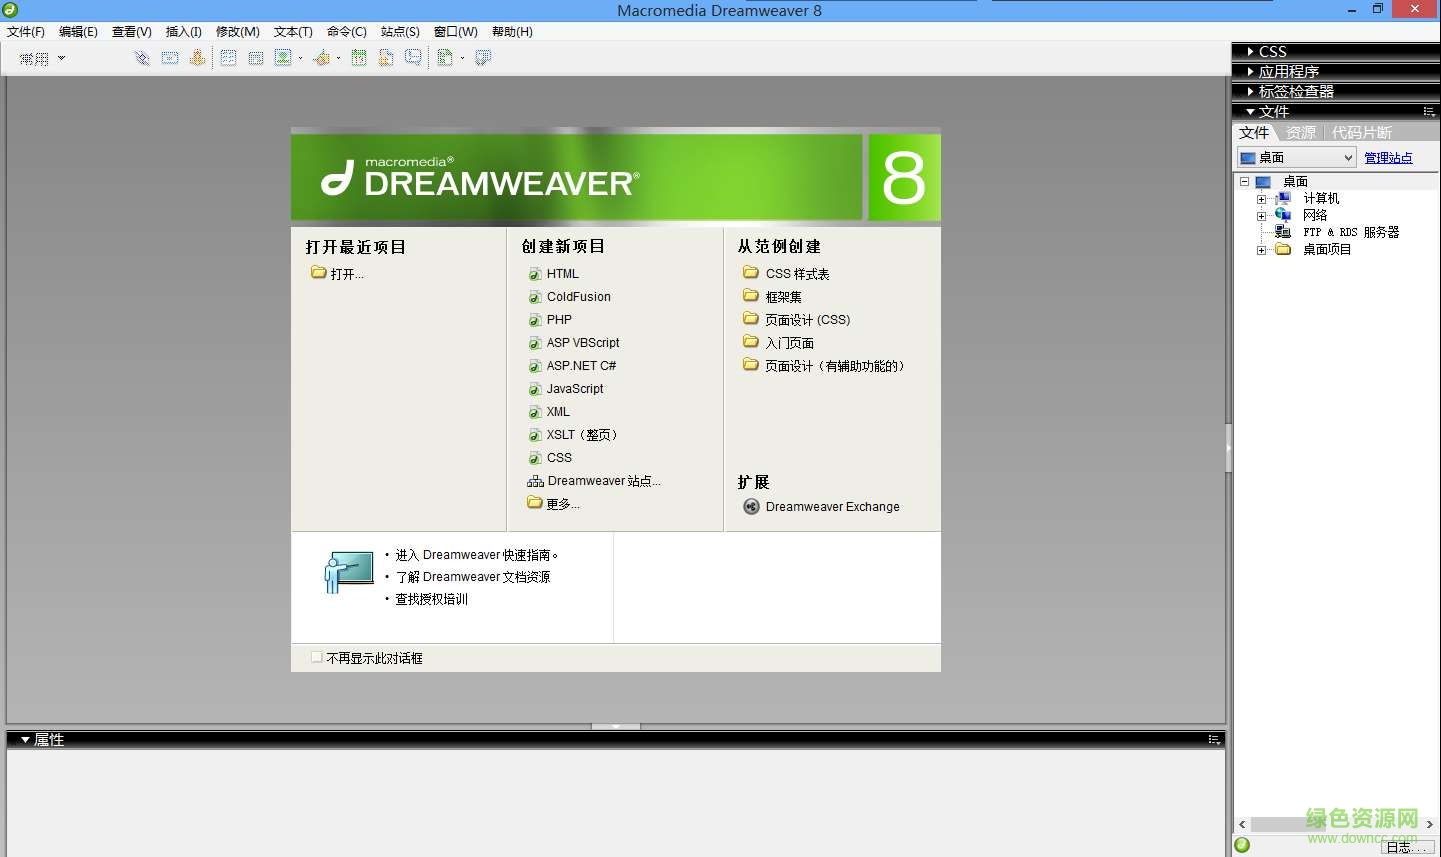 dreamweaver8激活码 v8.0 免费版